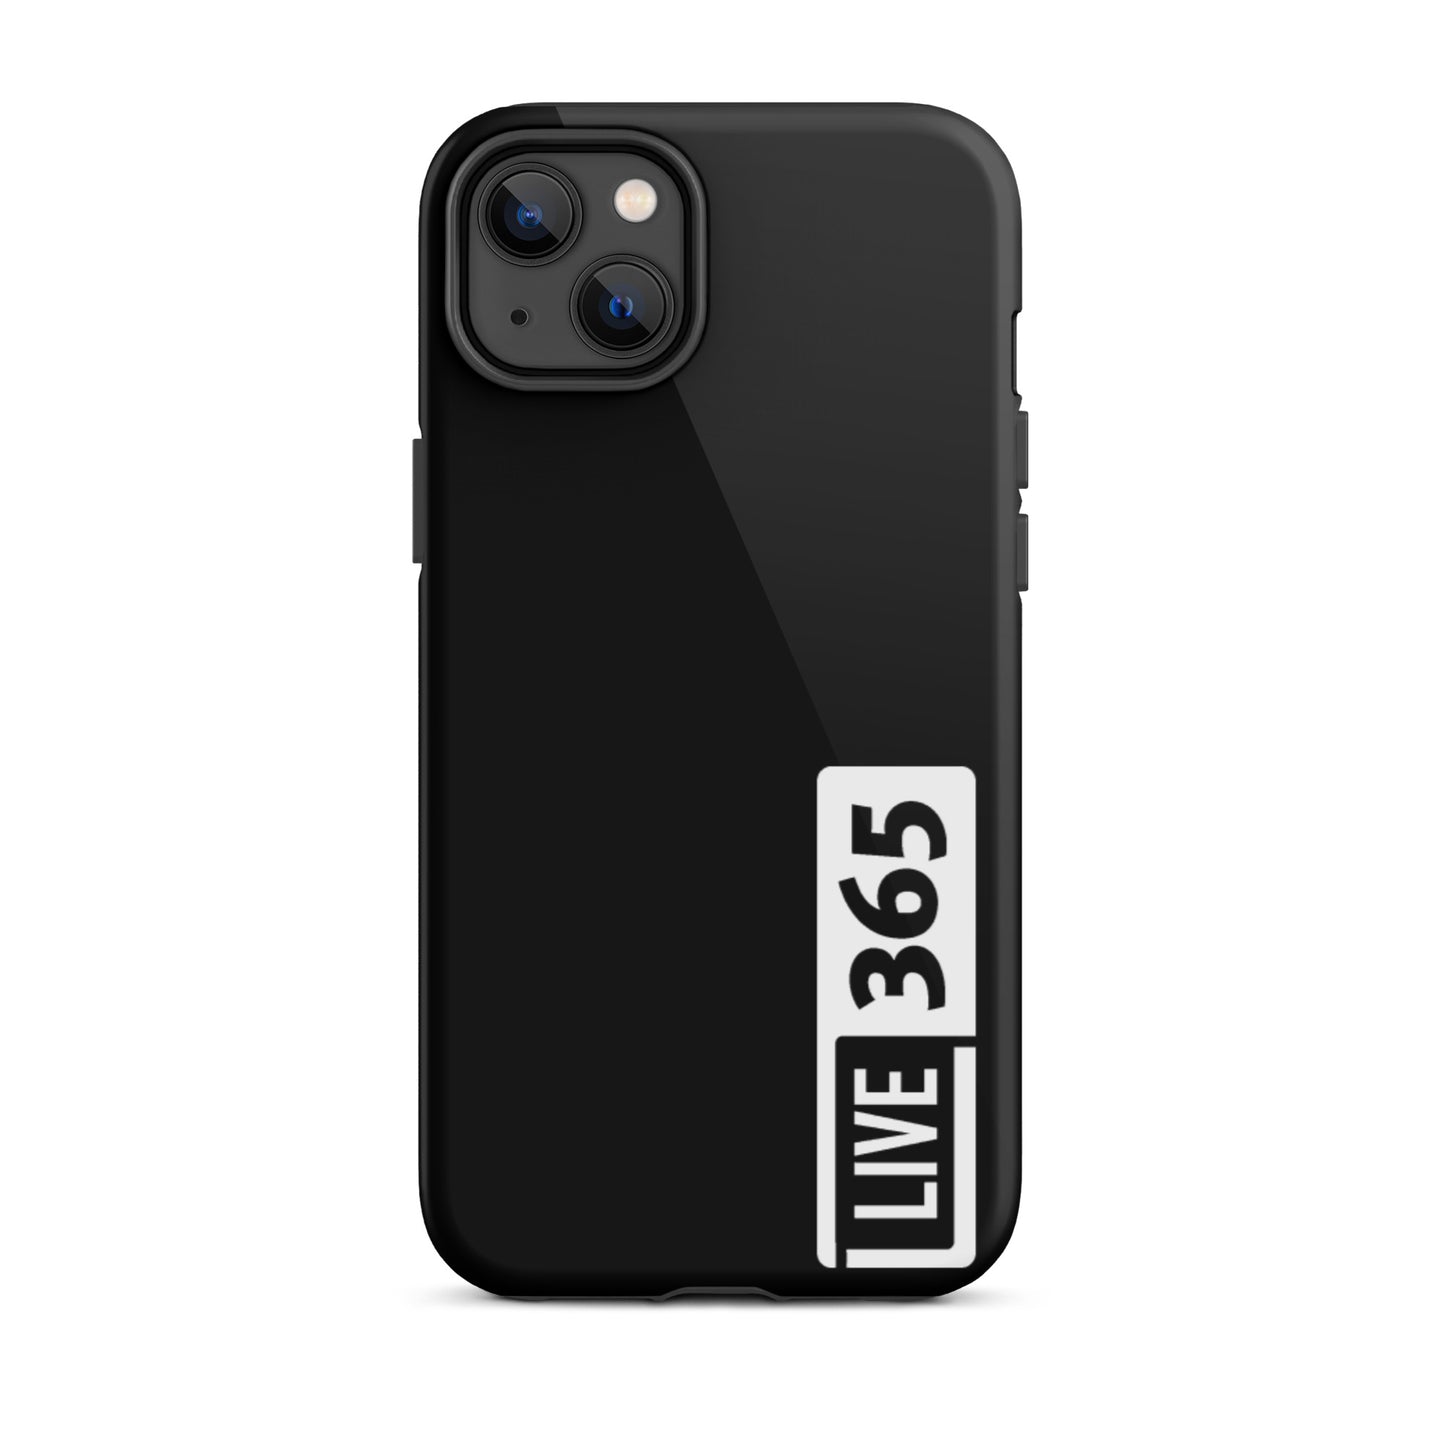 Live365 iPhone Case